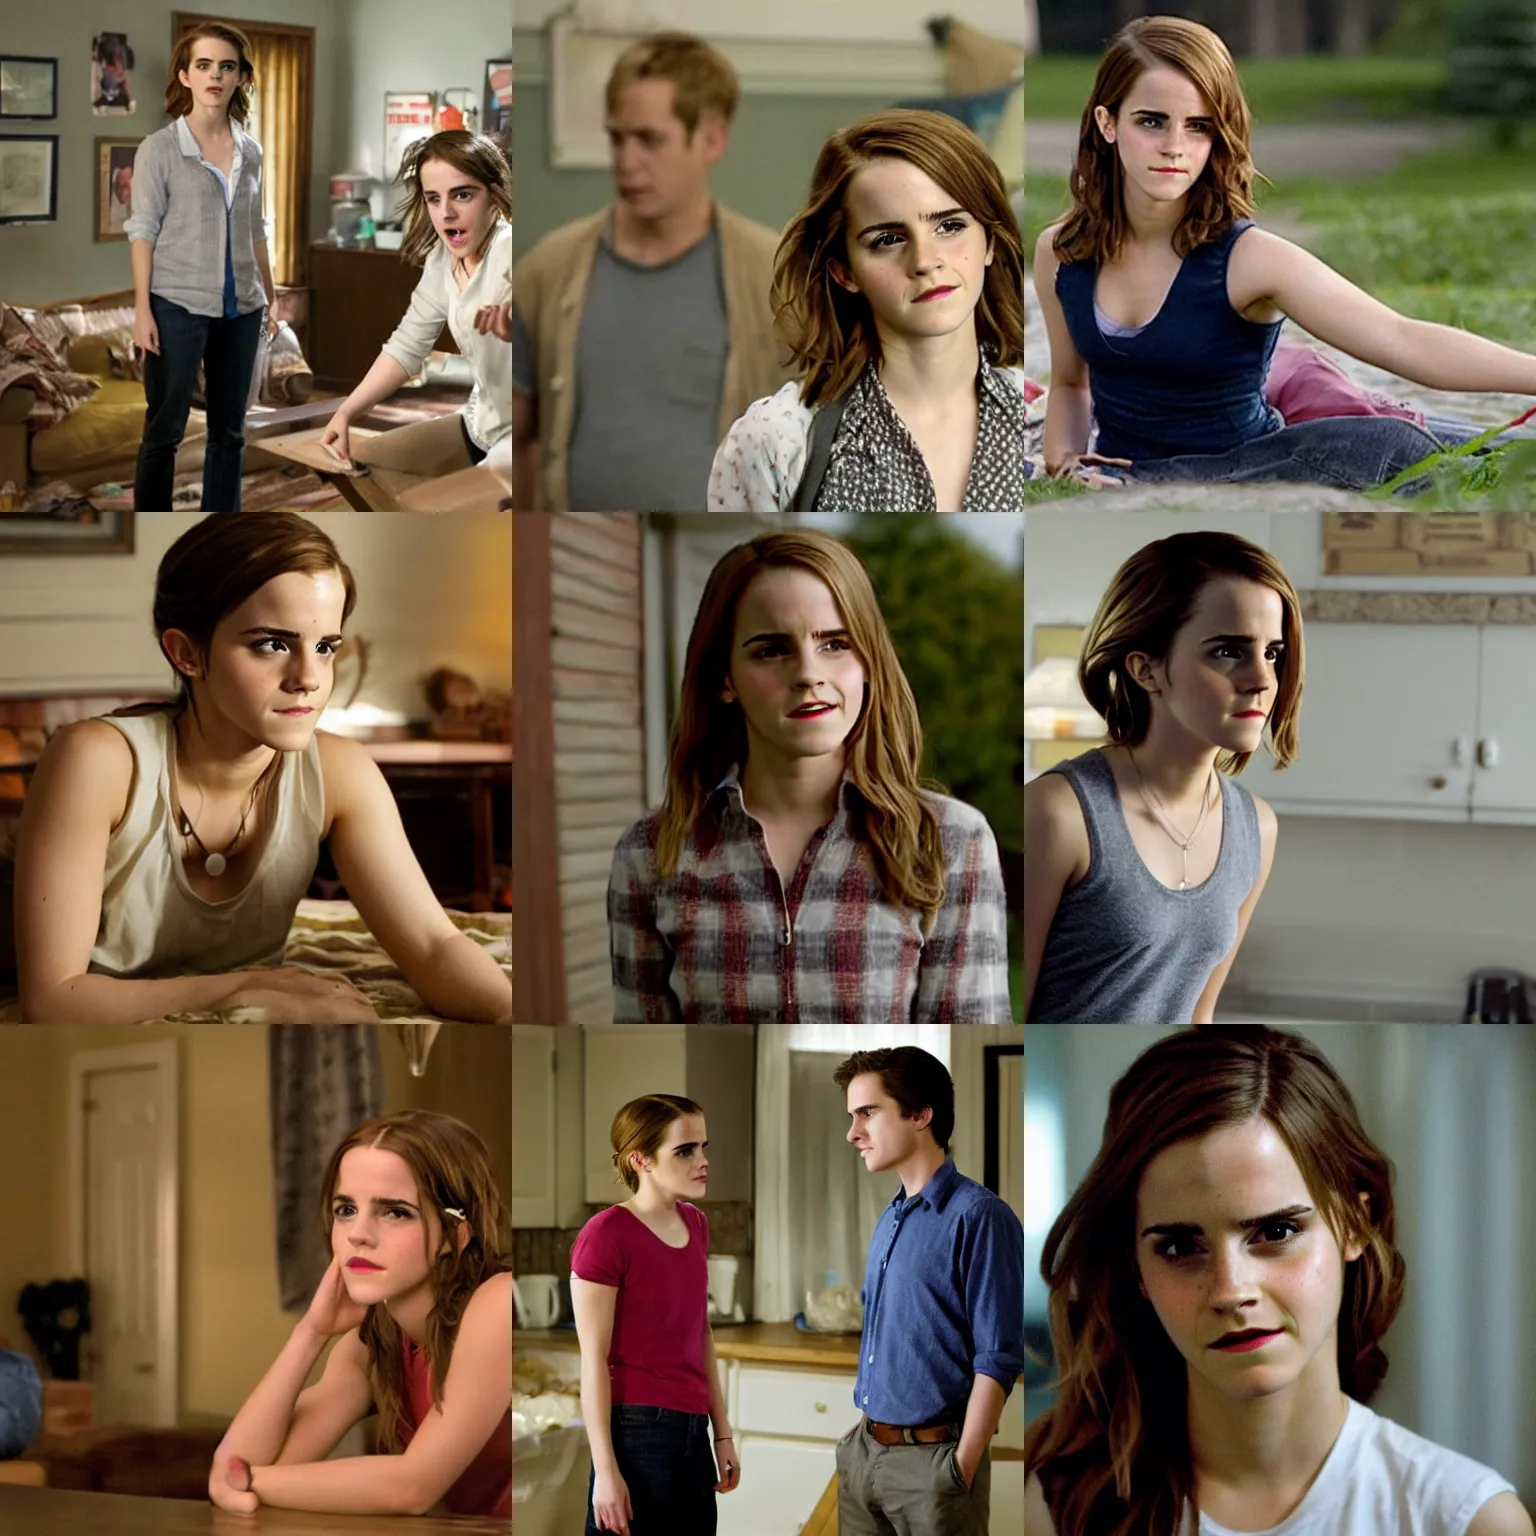 Prompt: Movie still of Emma Watson in American Pie